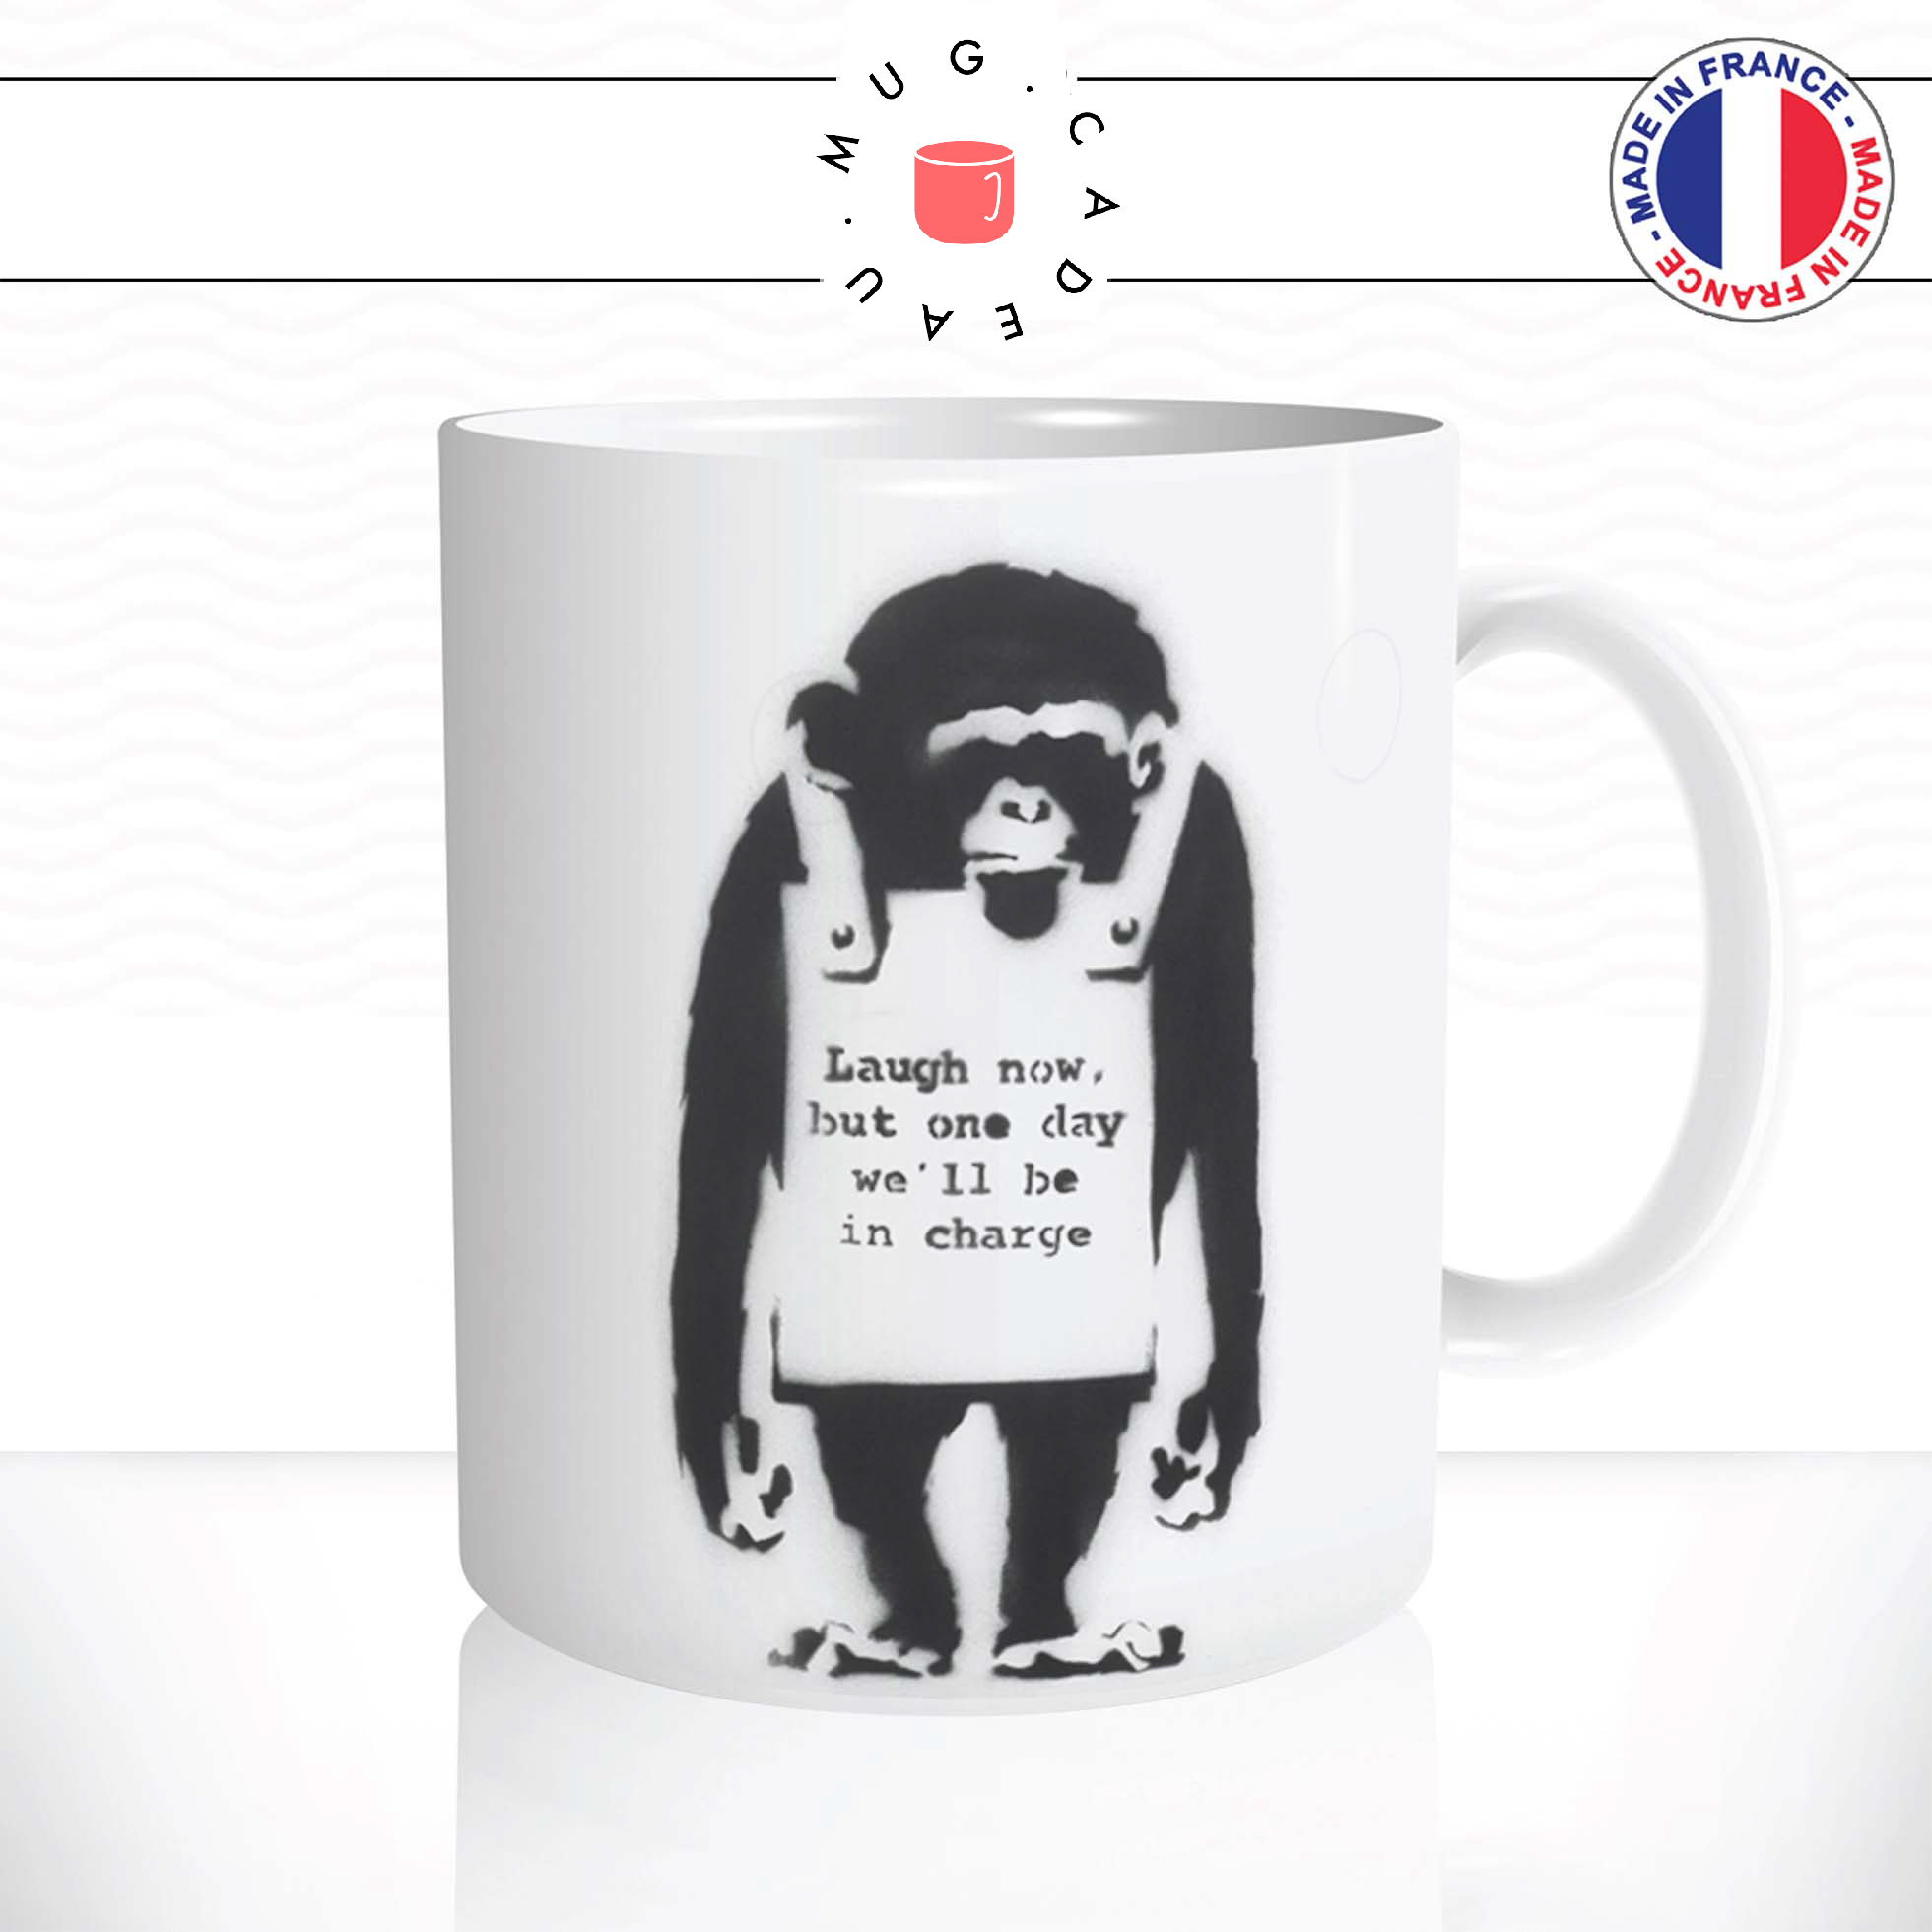 mug-tasse-ref8-art-artiste-bansky-graff-singe-pancarte-phrase-menace-cafe-the-mugs-tasses-personnalise-original-anse-droite